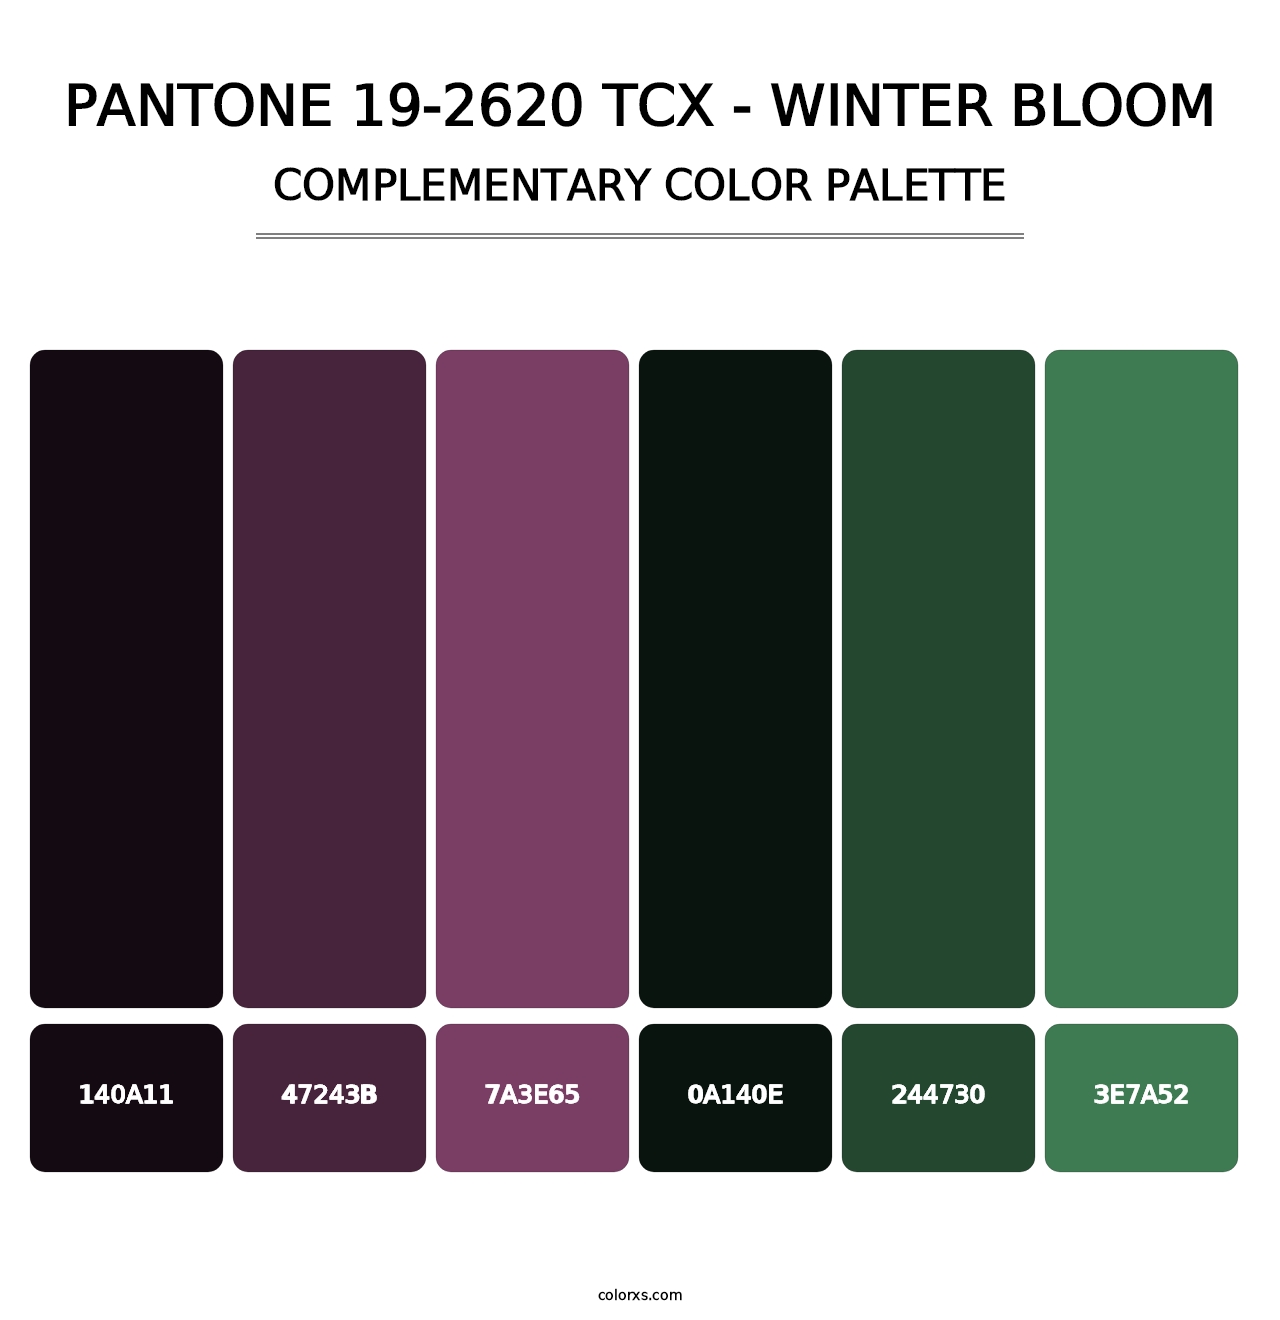 PANTONE 19-2620 TCX - Winter Bloom - Complementary Color Palette